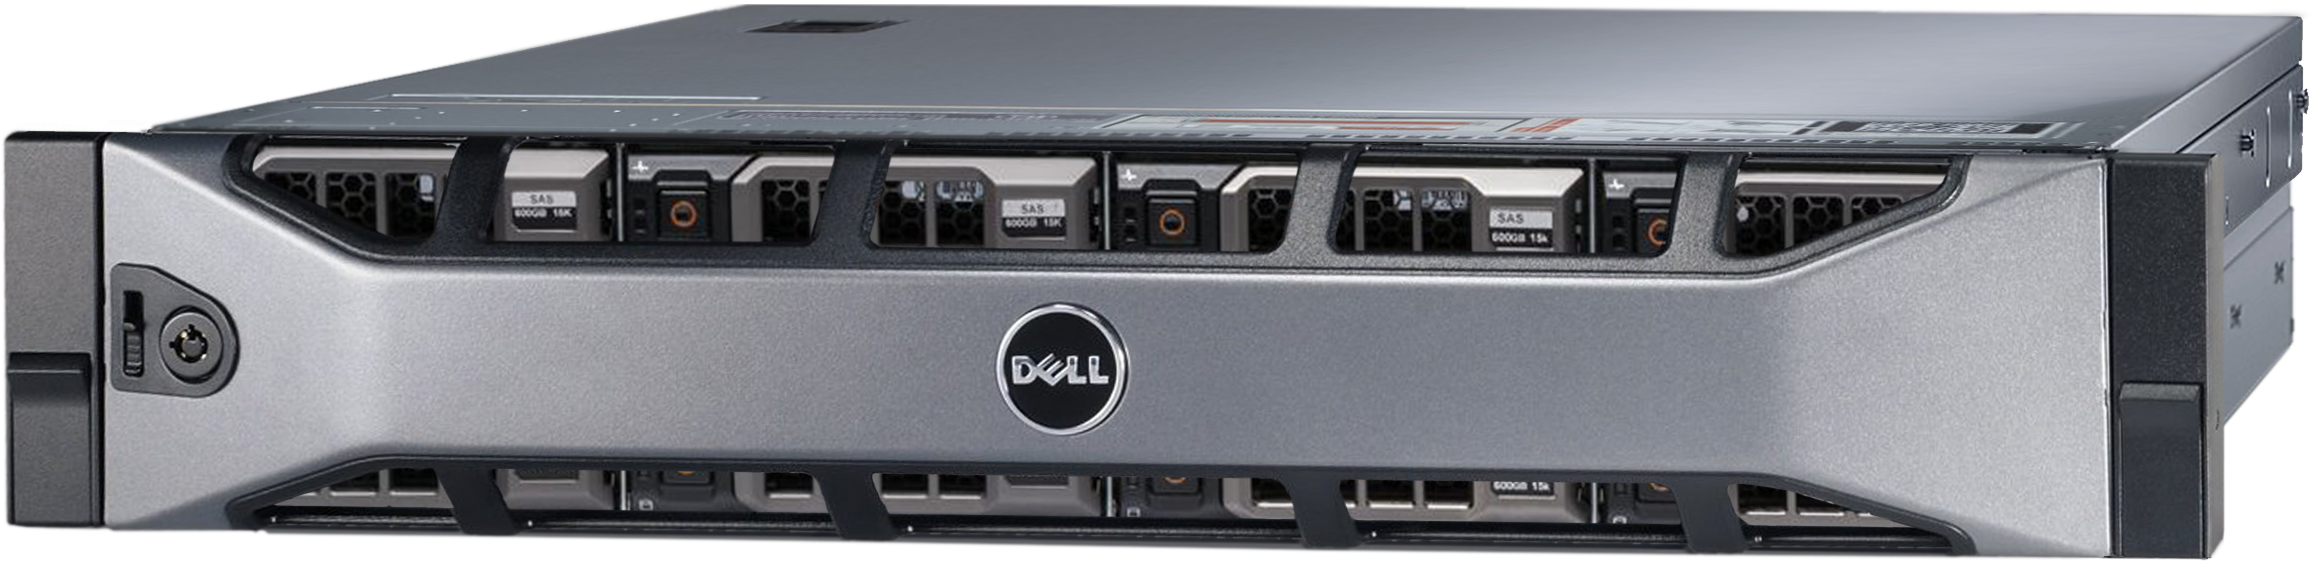 Аренда физического сервера DELL R720xd / 2 × E5-2620 v2 / 32 GB RAM / 2 × 240 GB SSD / 12 × 8 TB HDD / H310